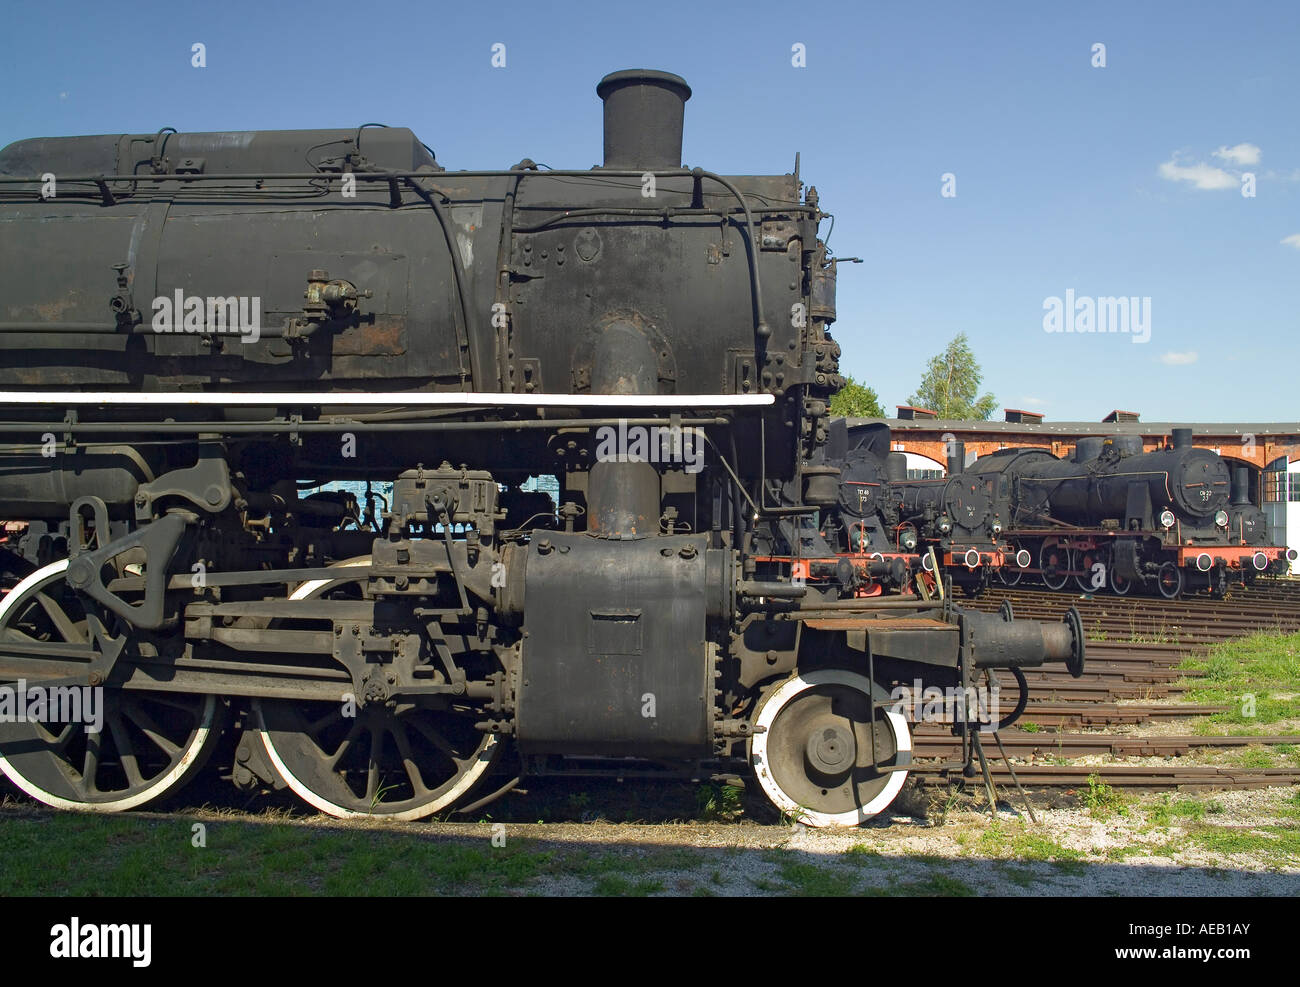 Steam engine locomotive Stock Photo